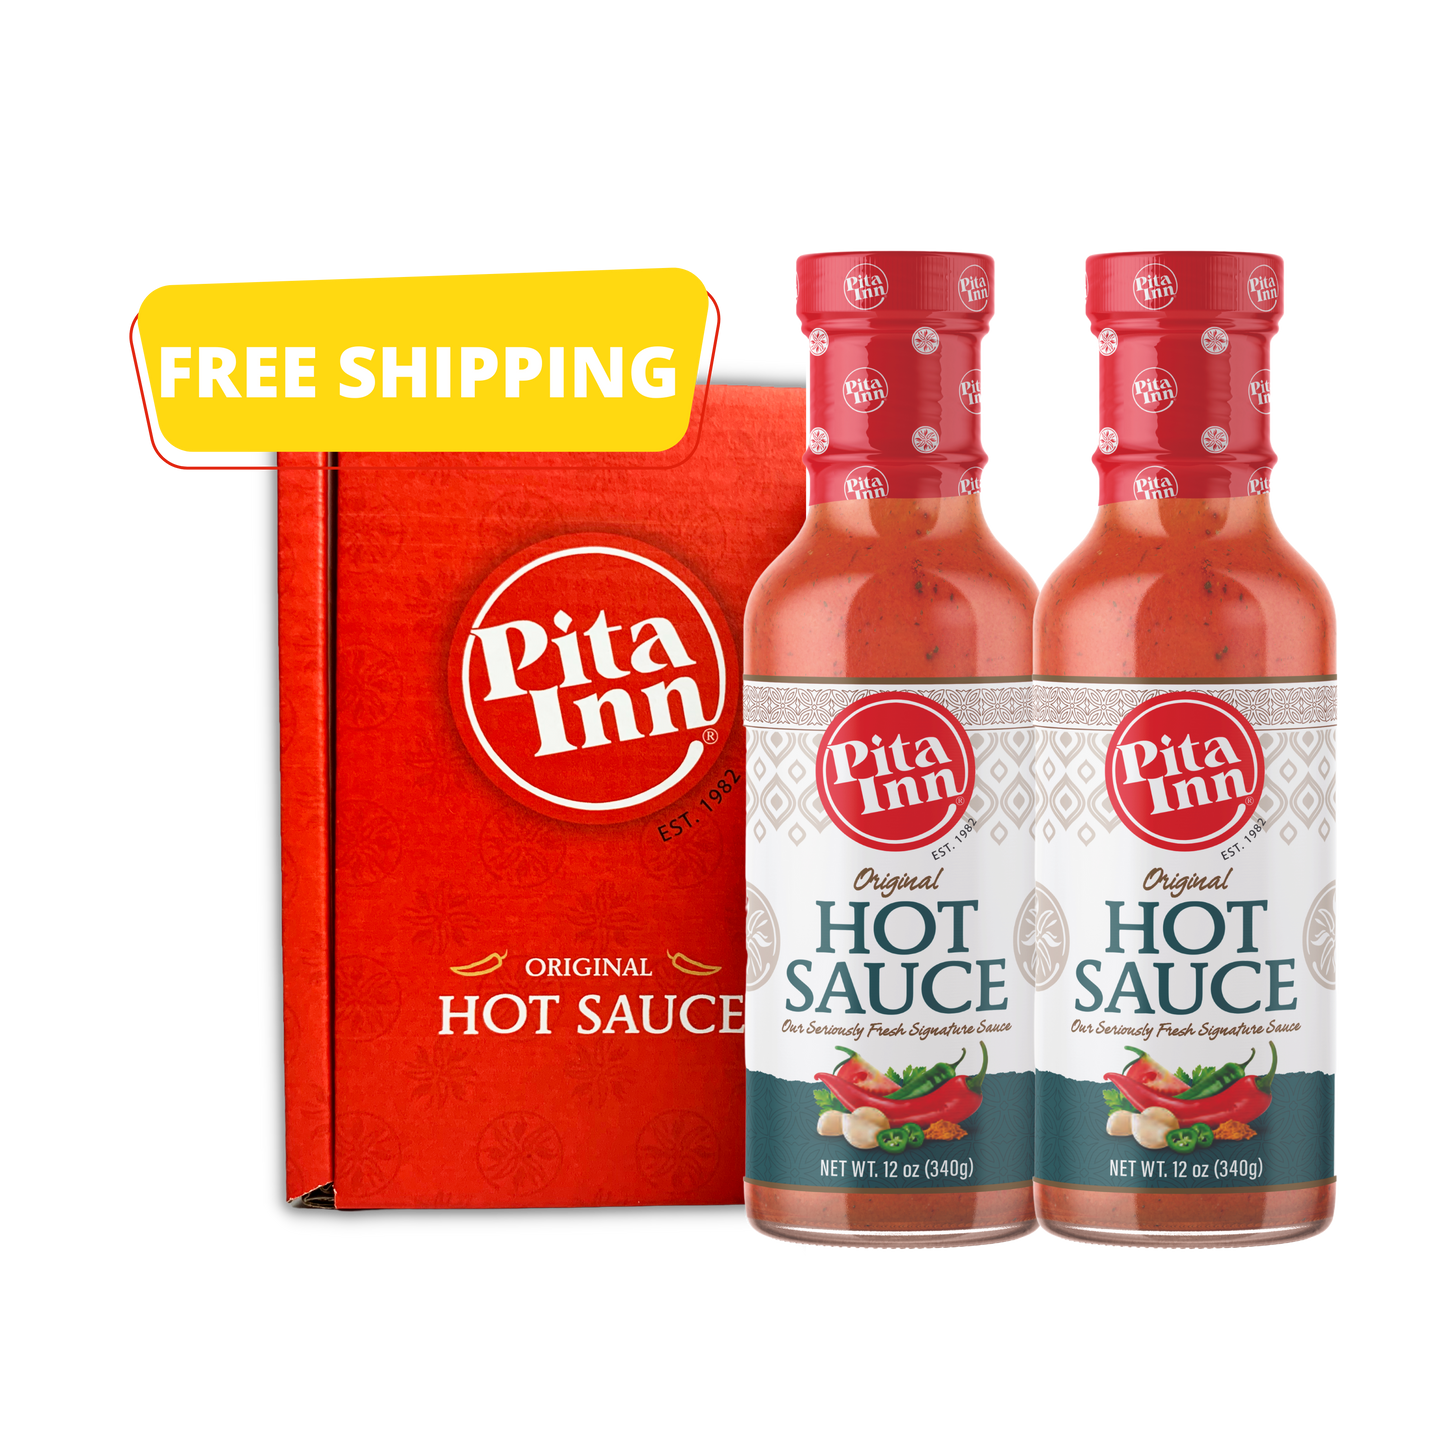 Pita Inn Original Hot Sauce Gift Box